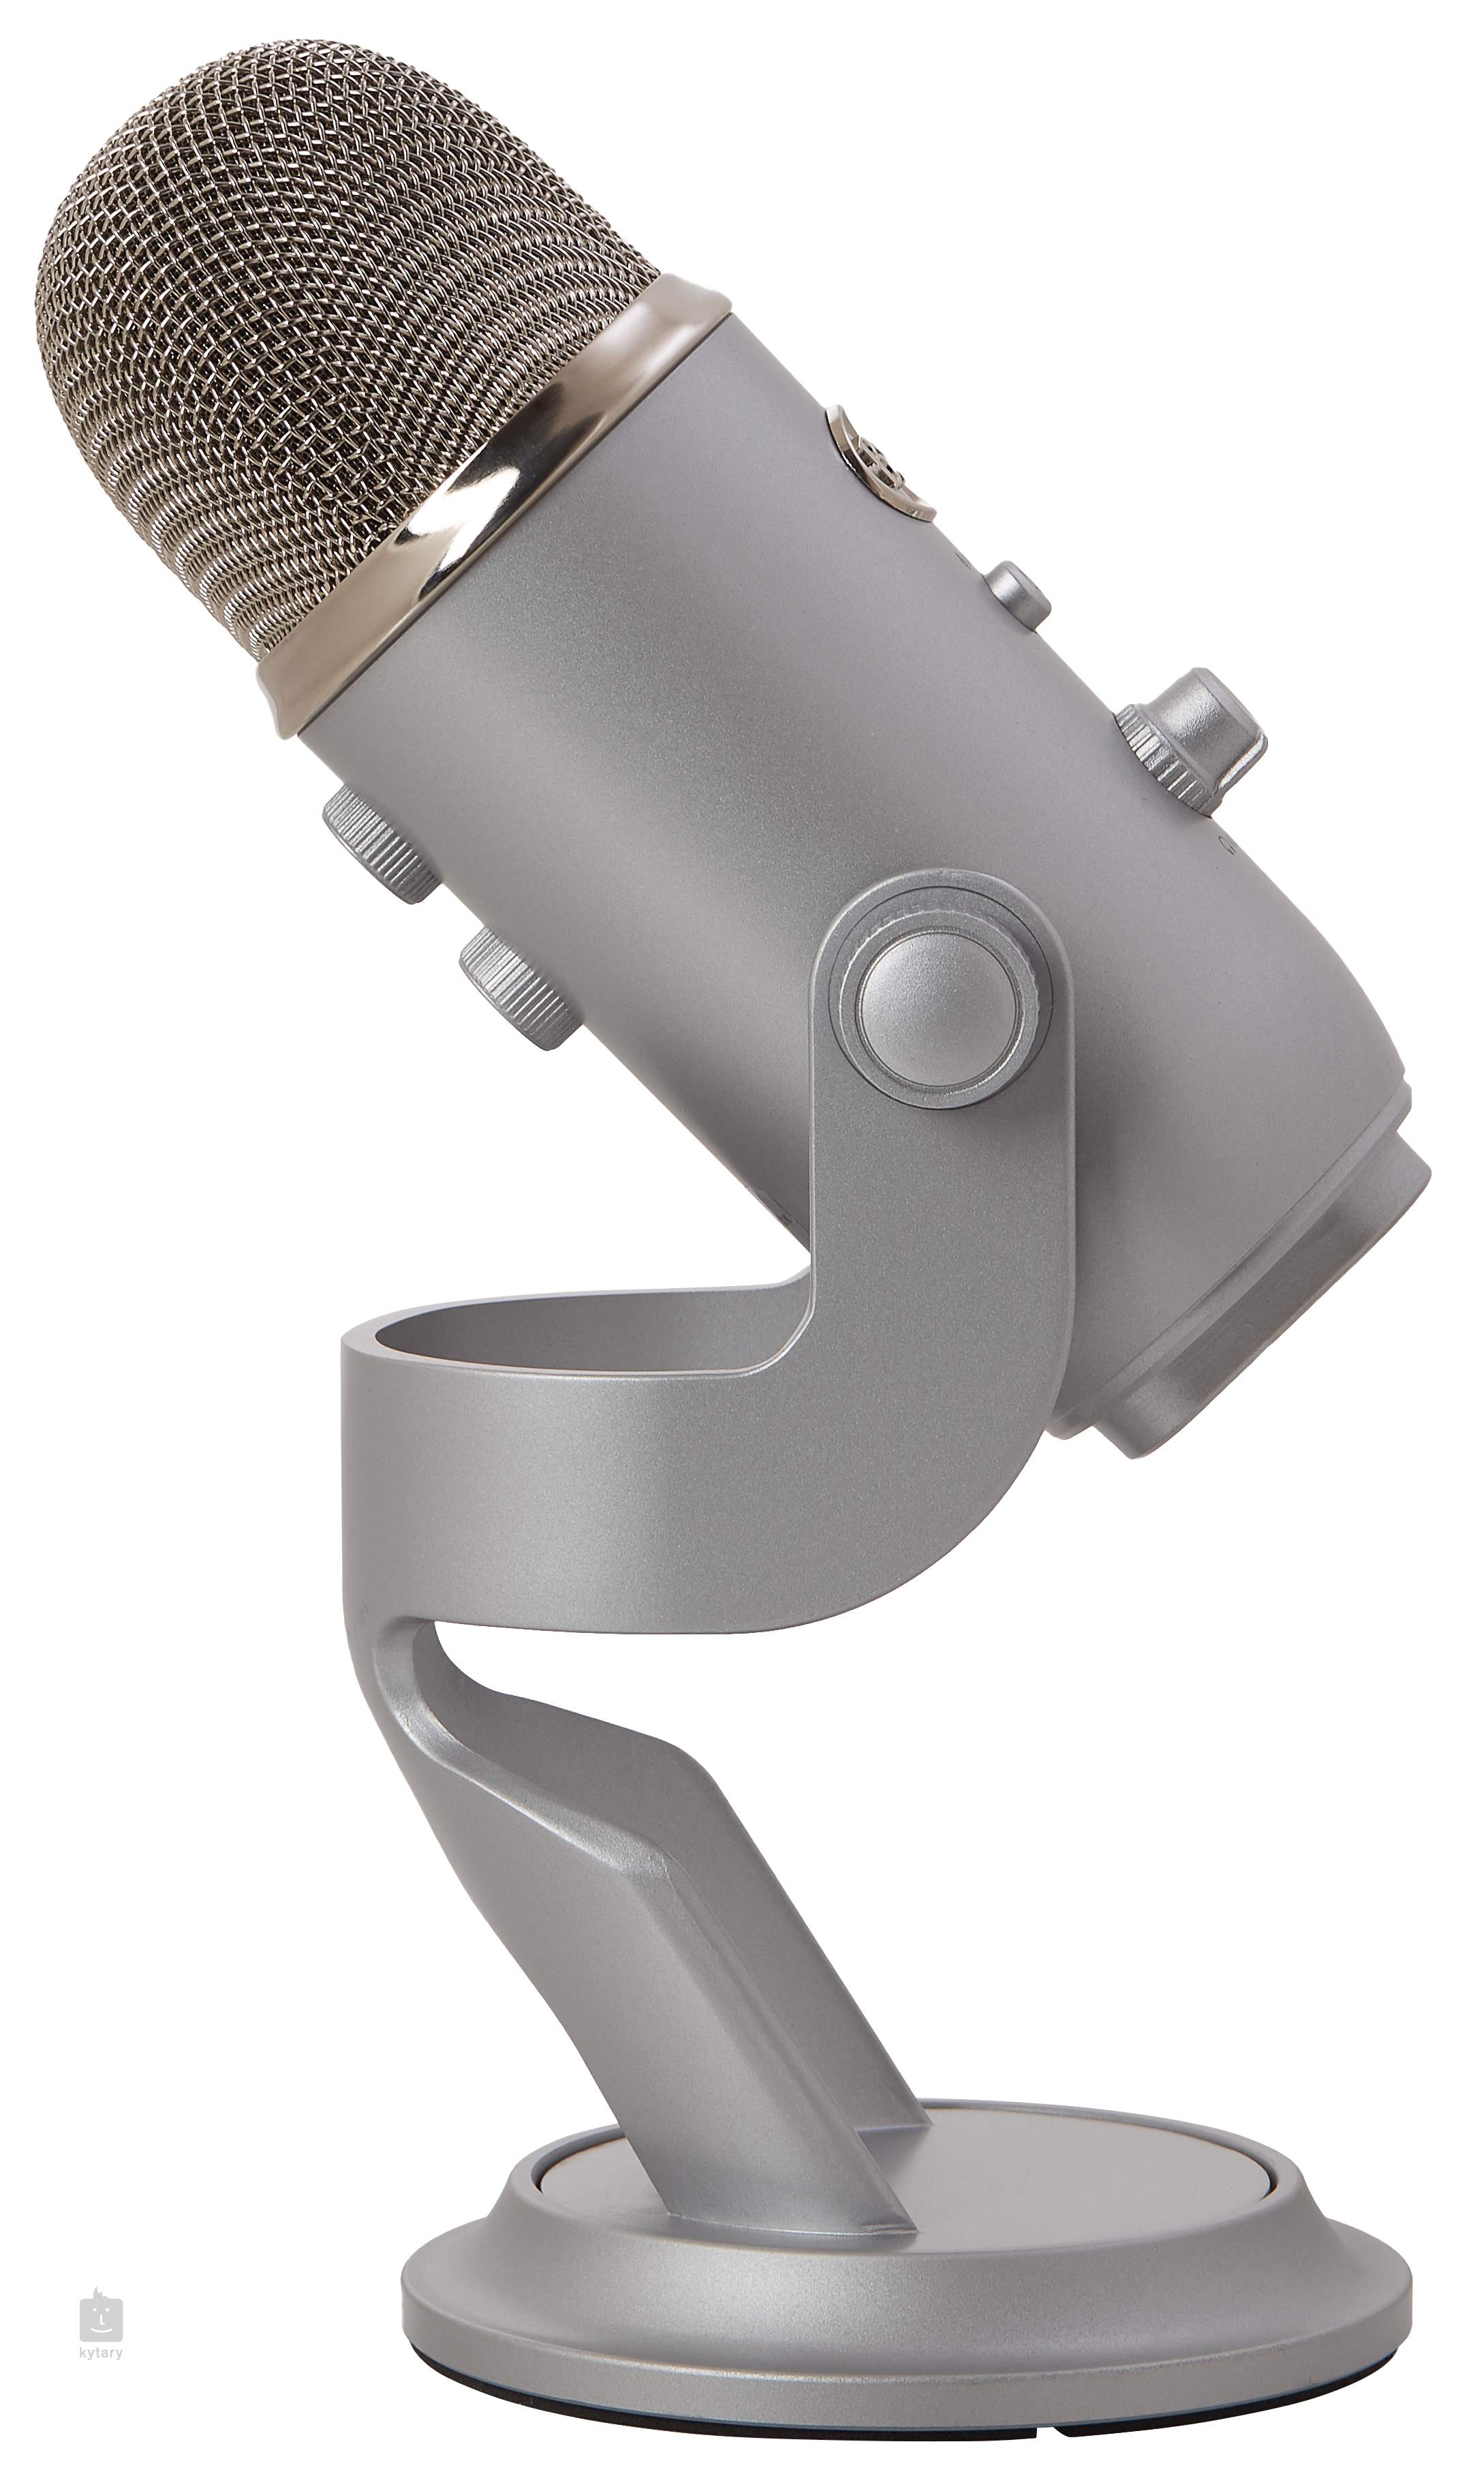 Blue Microphones Yeti - Microphone - USB - silver